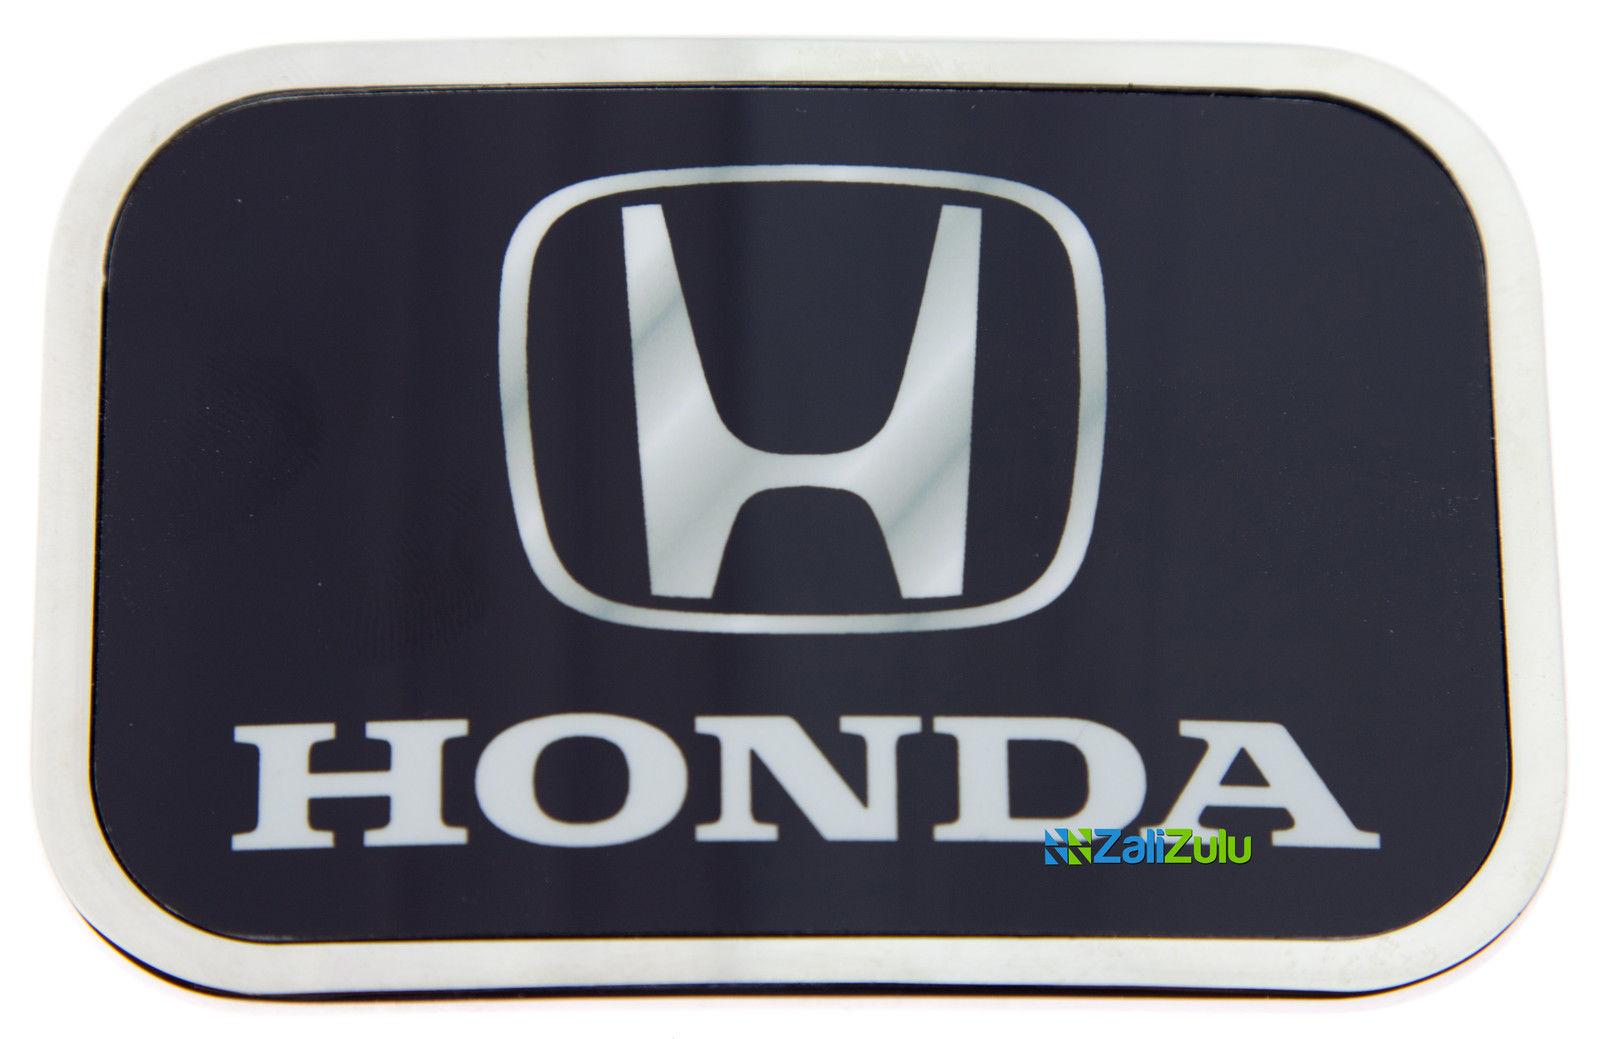 Хонда лого дверь. Логотип Хонда. Логотип Хонда фит. Хонда лого автозвук. Хонда лого динамики.